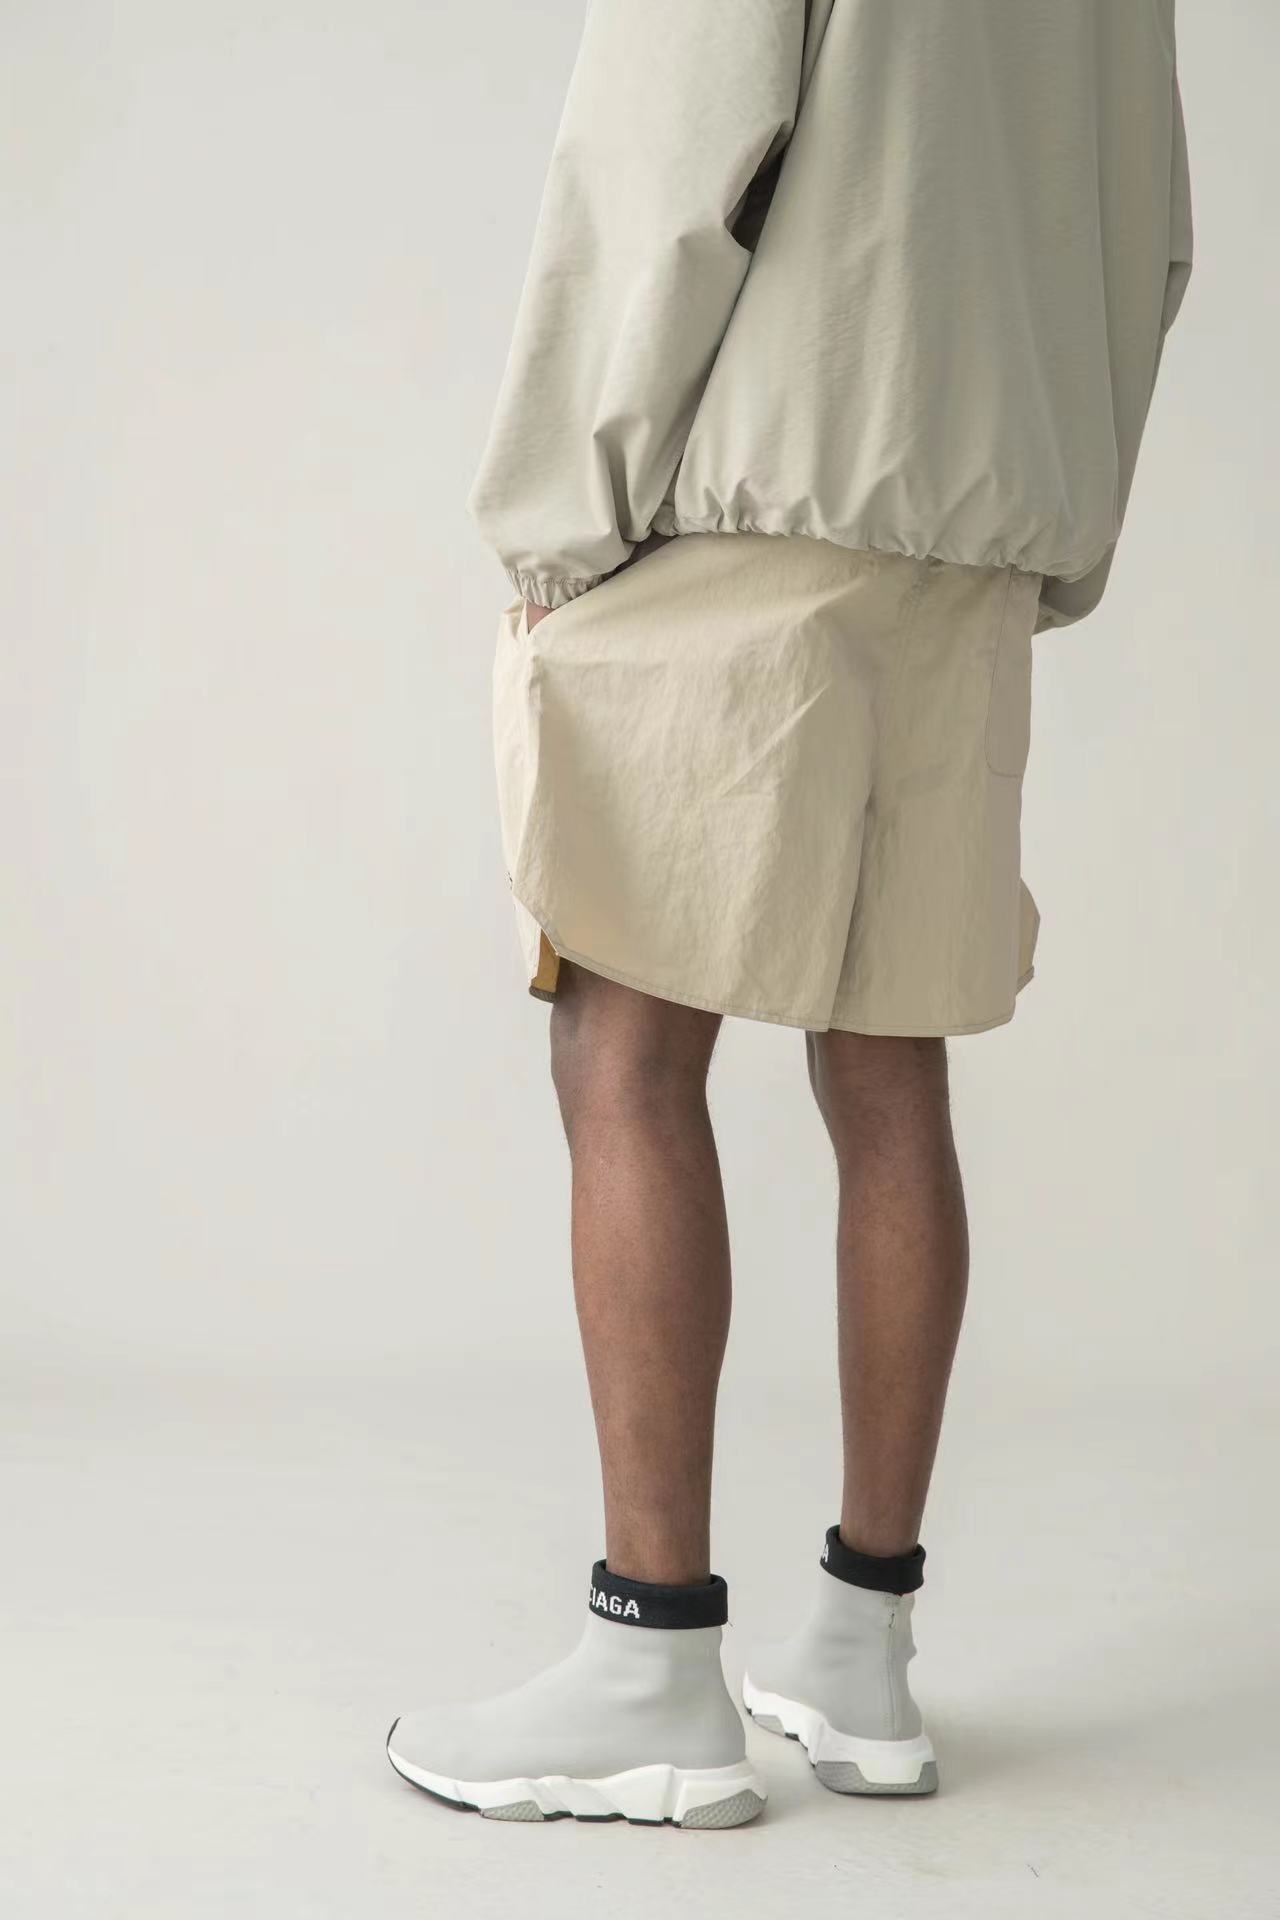 Men's Reflective Shorts Designer Reflective Woven Printed Shorts Nylon Casual Capris Sports Pants Fashion Solid Color Sports Couple Hip Hop Streetwear